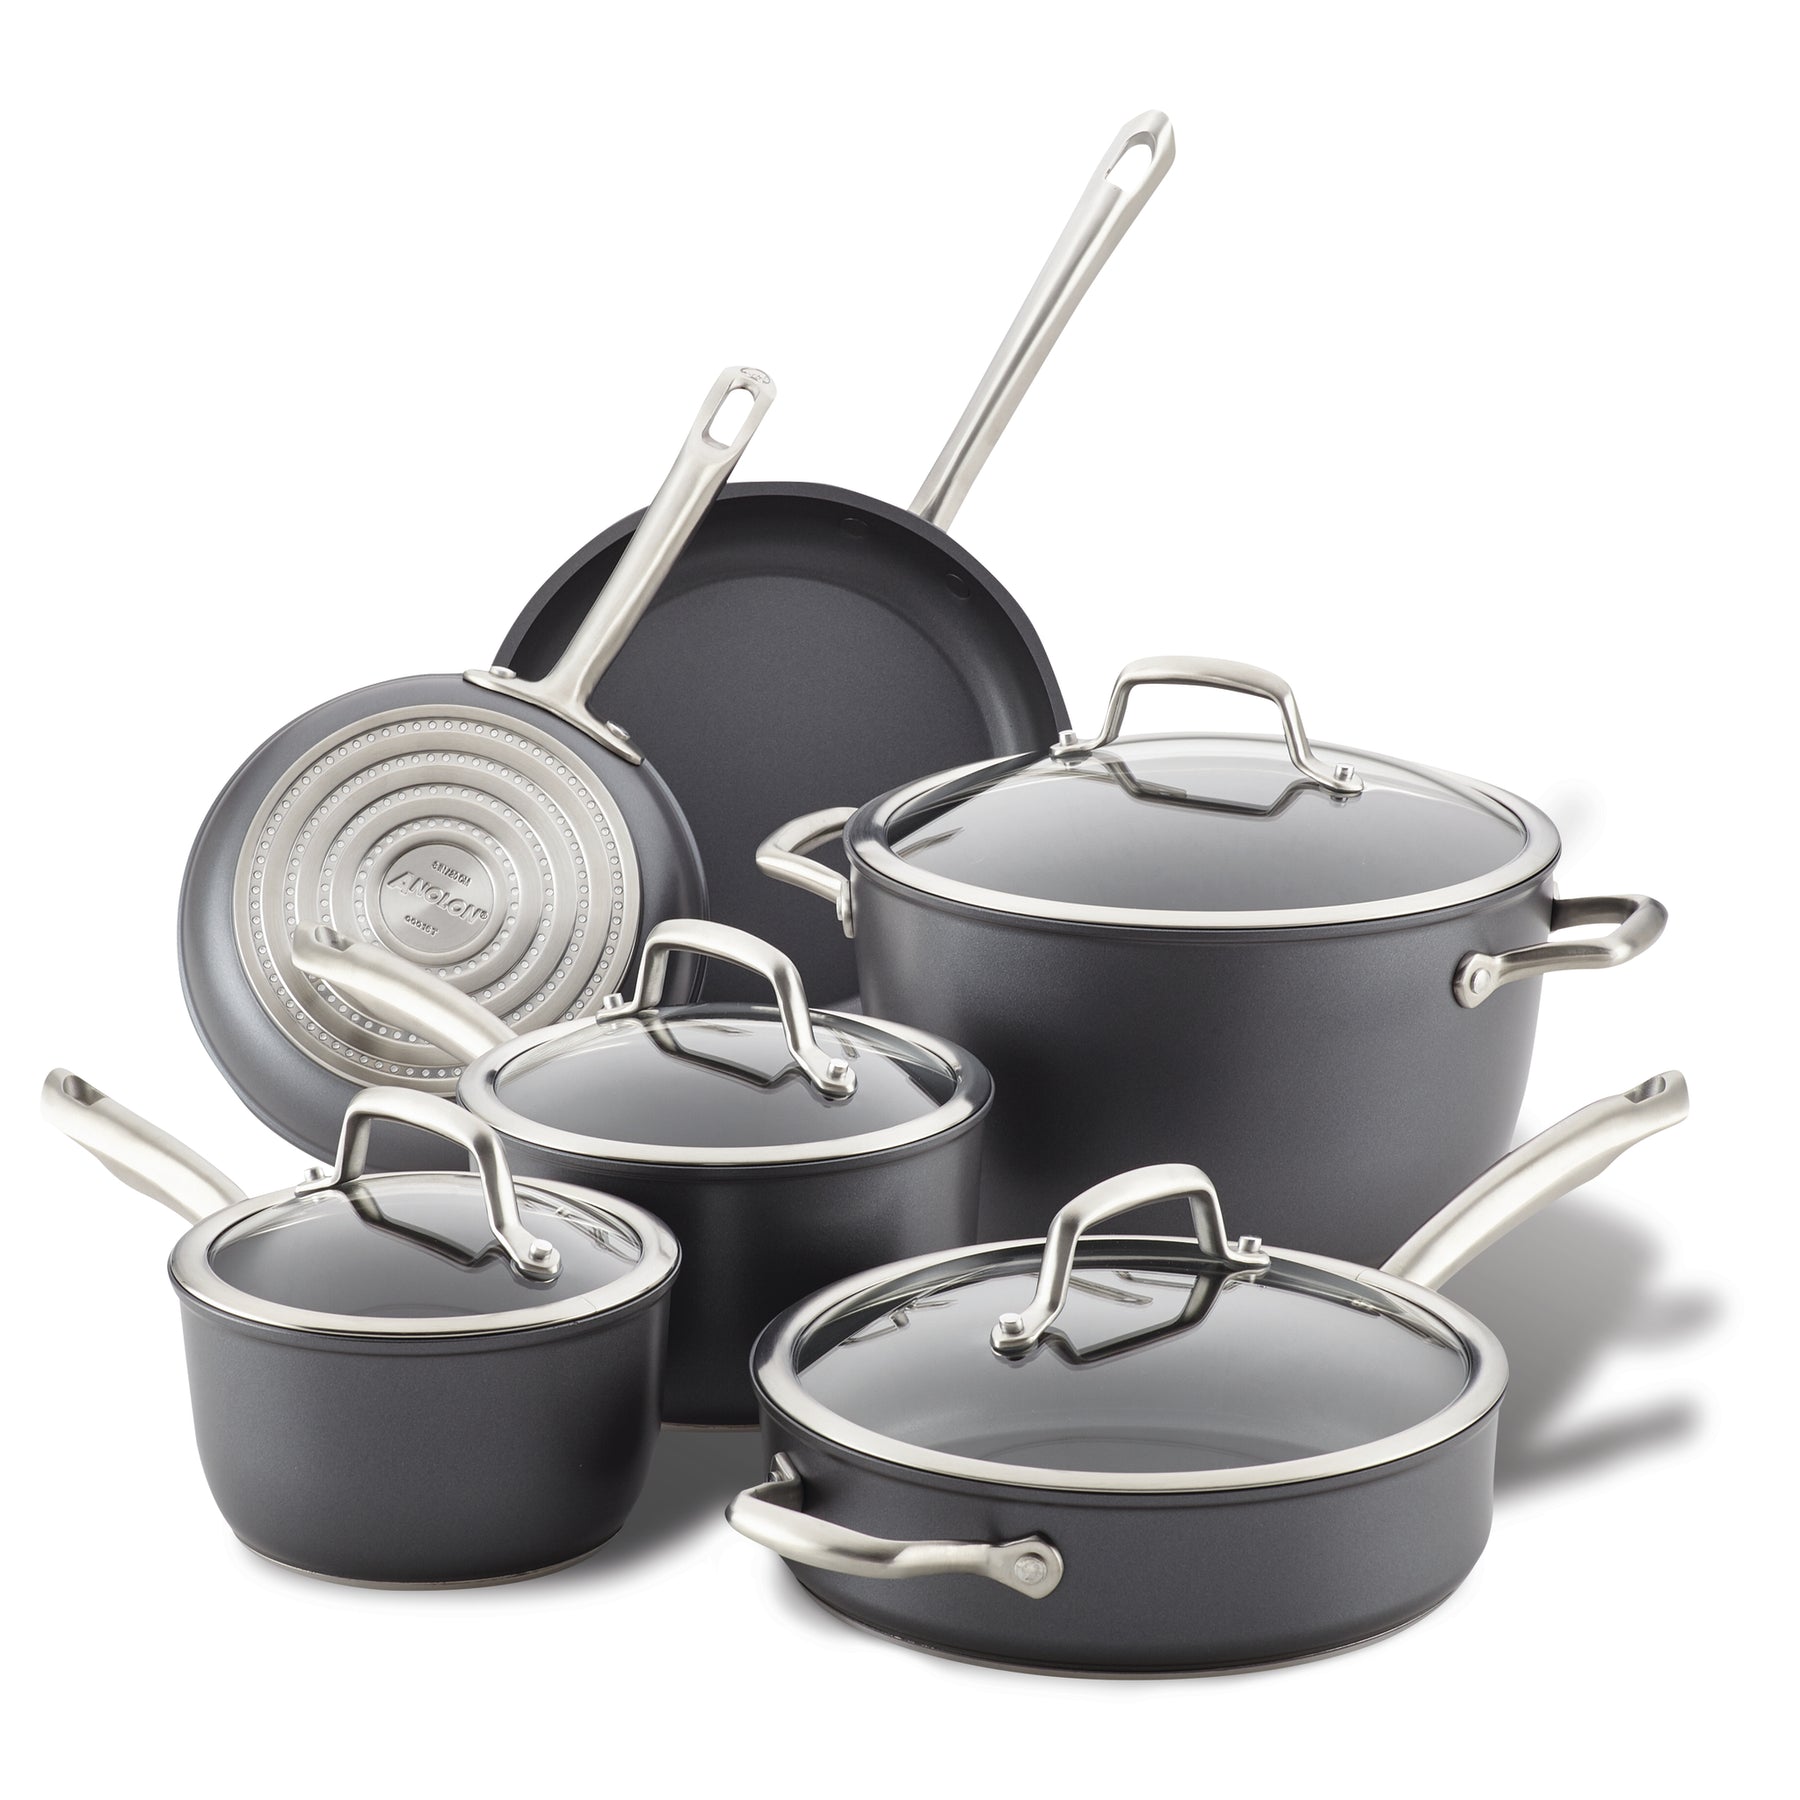  Anolon X Hybrid Nonstick Cookware Induction / Pots and Pans  Set, 10 Piece - Dark Gray: Home & Kitchen